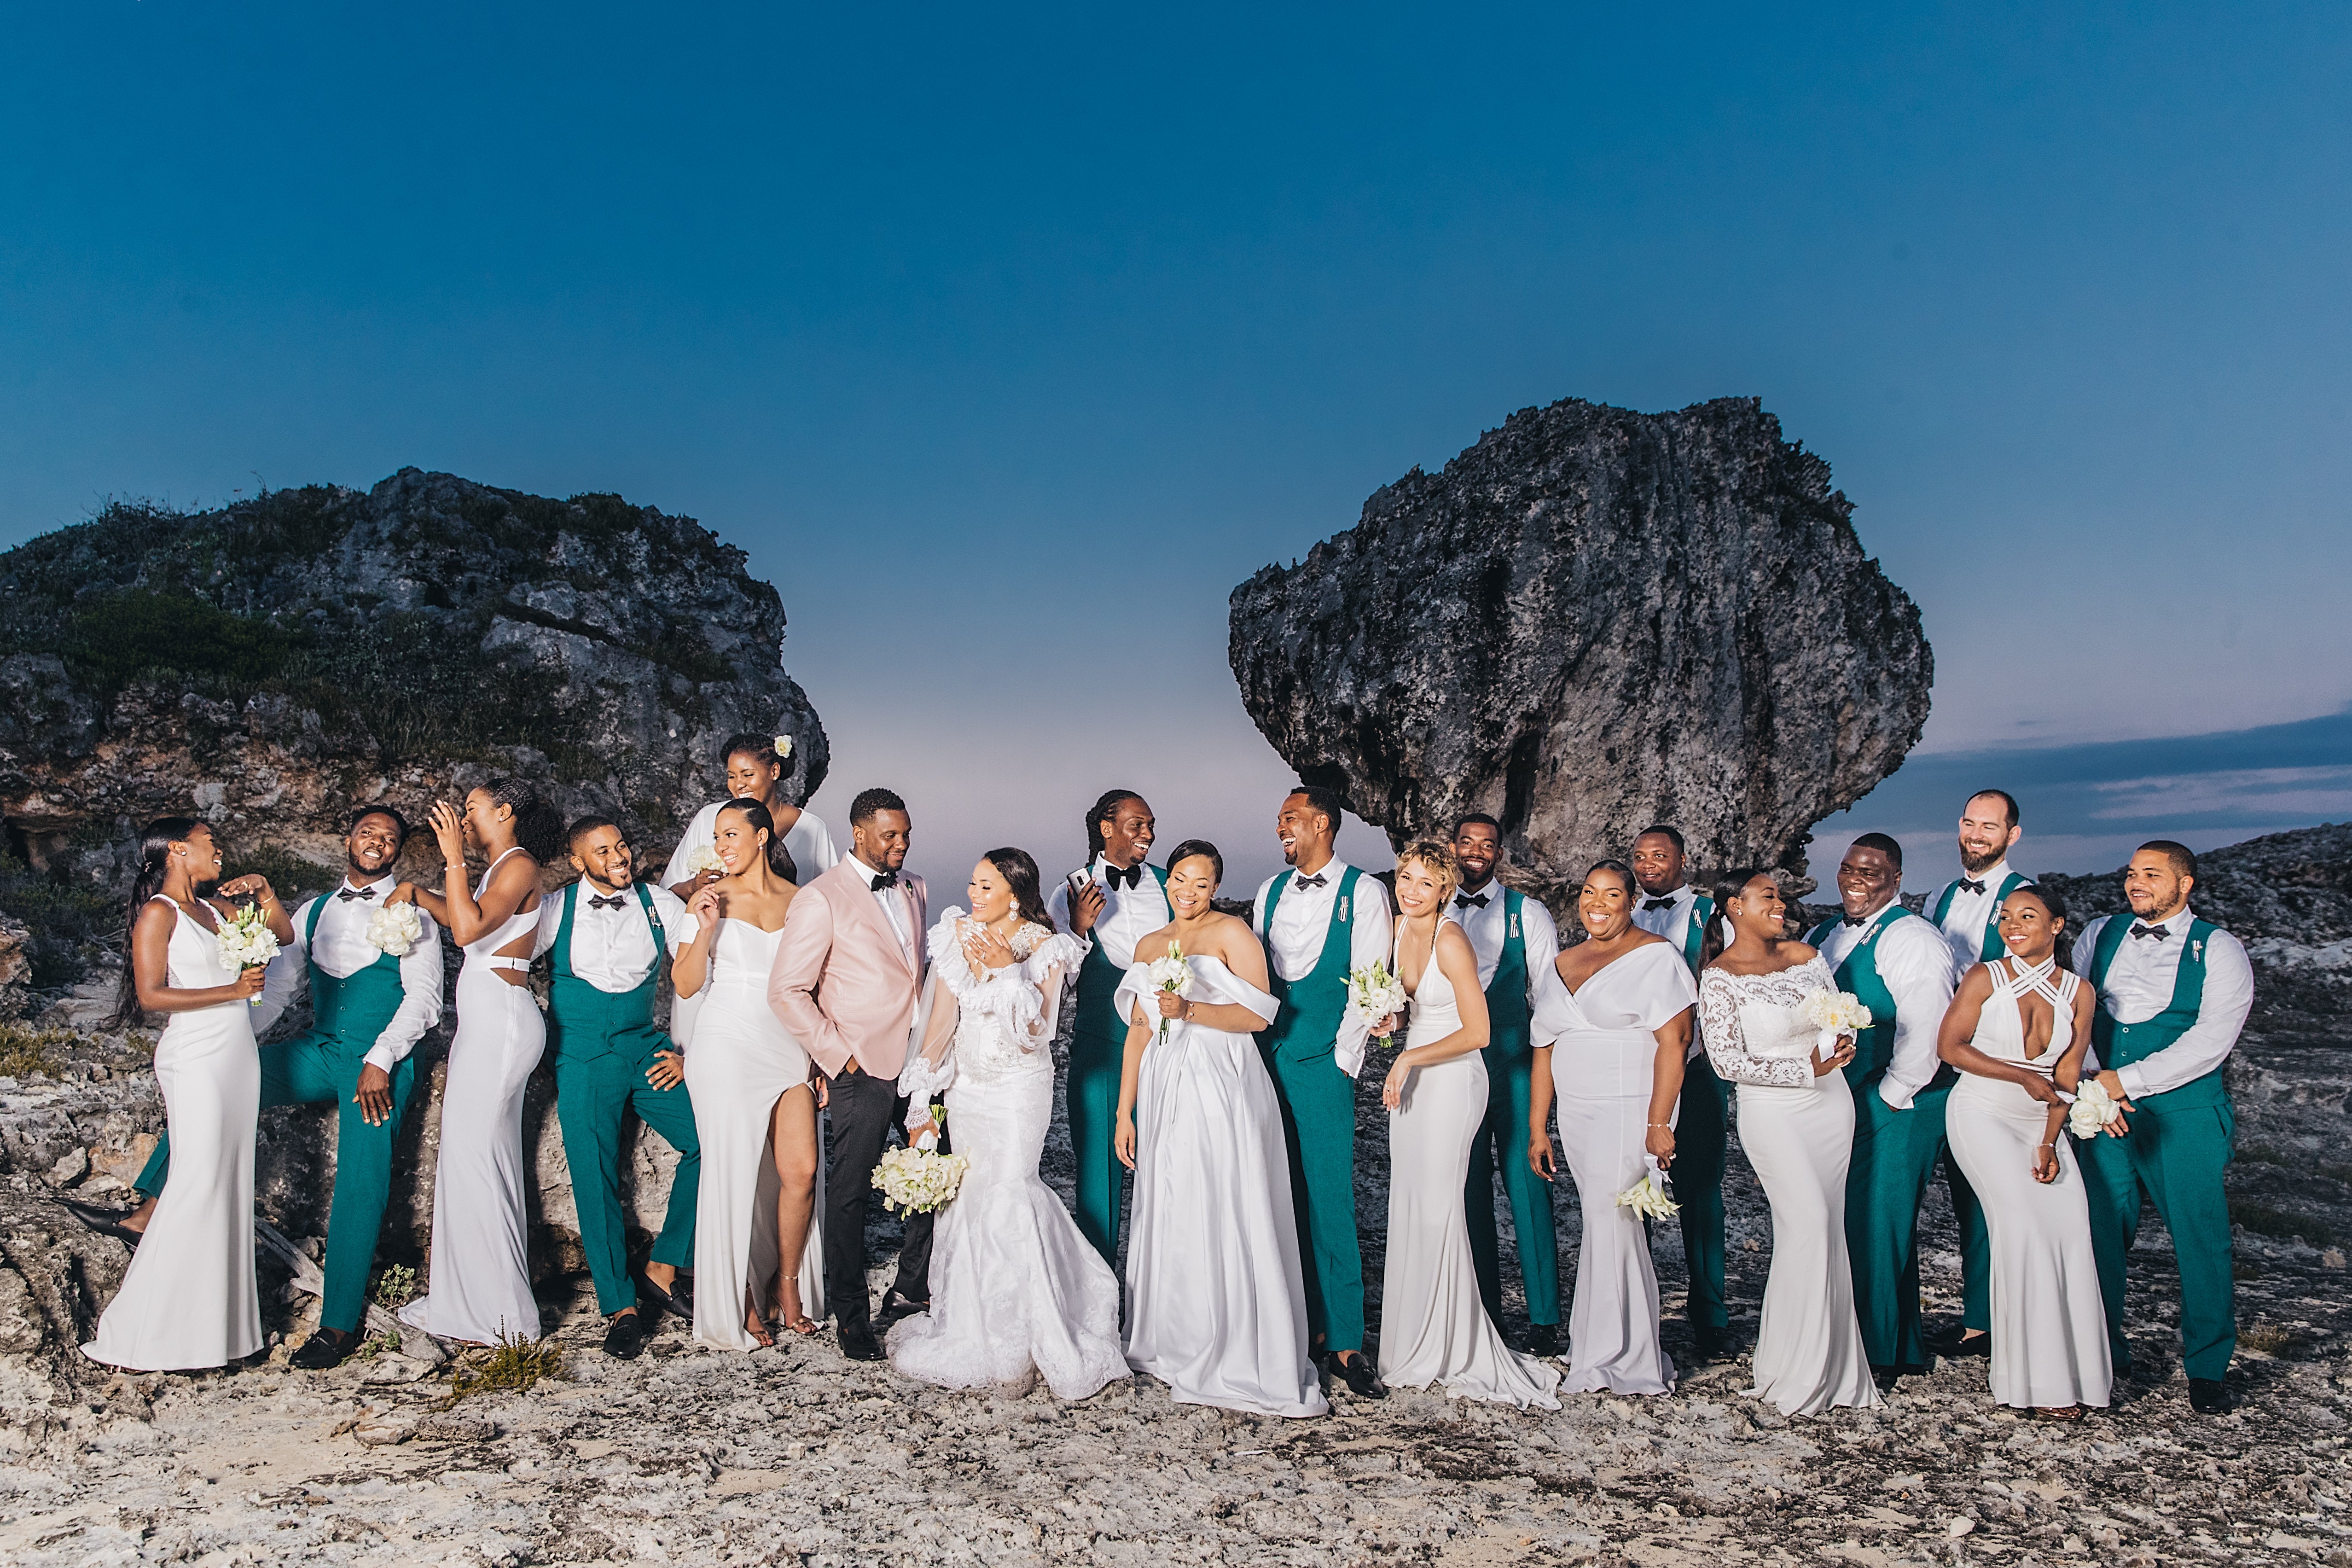 Bridal Bliss: Ian And Zemi’s Island Chic Bahamas Wedding Will Take Your Breath Away